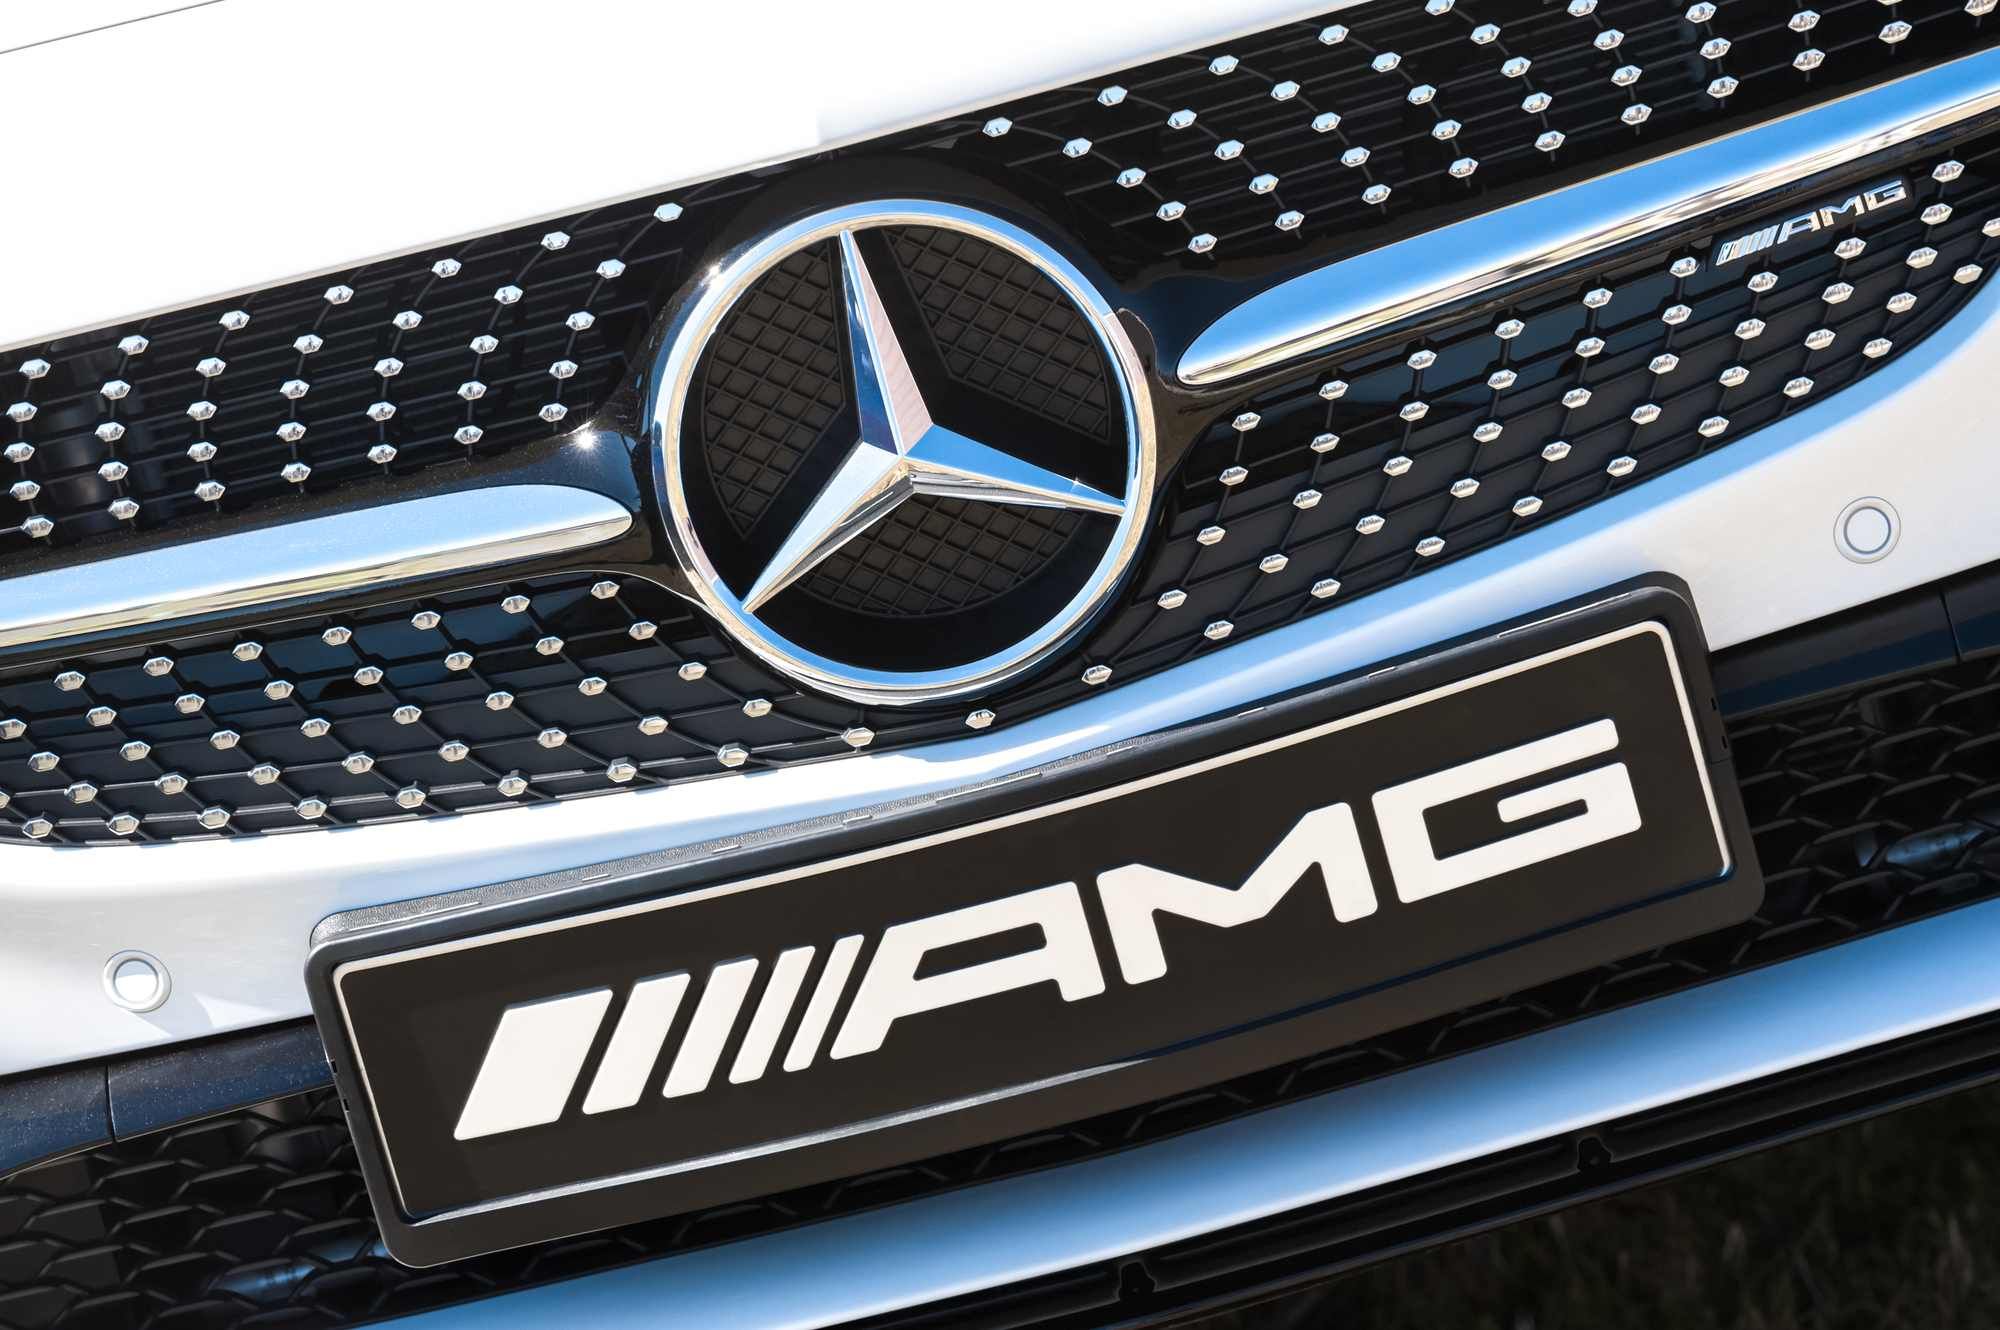 Mercedes Benz recall made on 1.2million vehicles